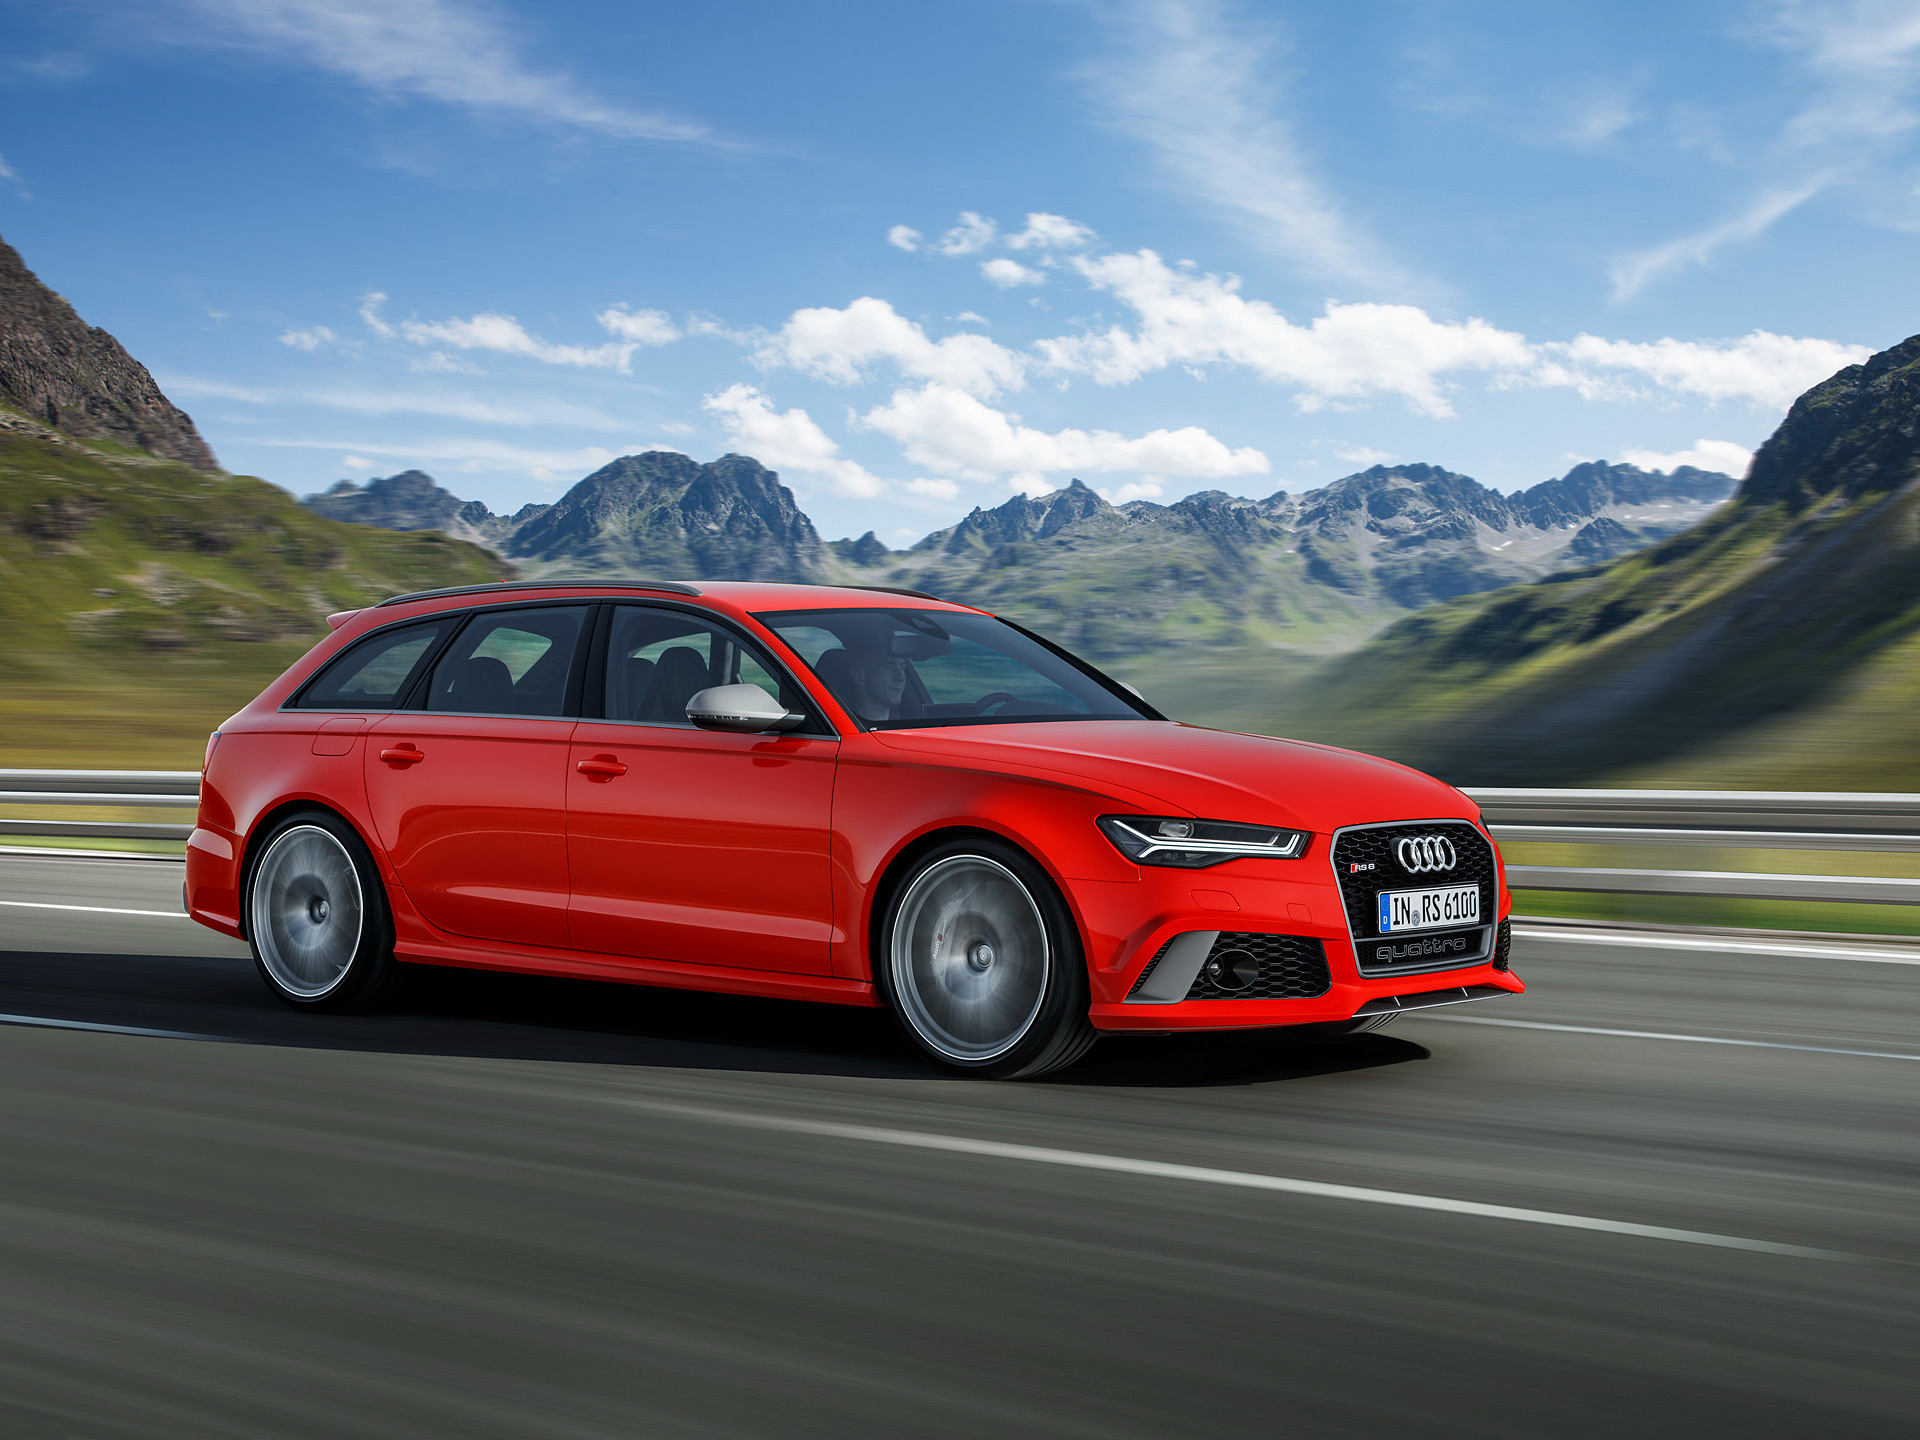  2016 Audi RS6 Avant Performance Wallpaper.